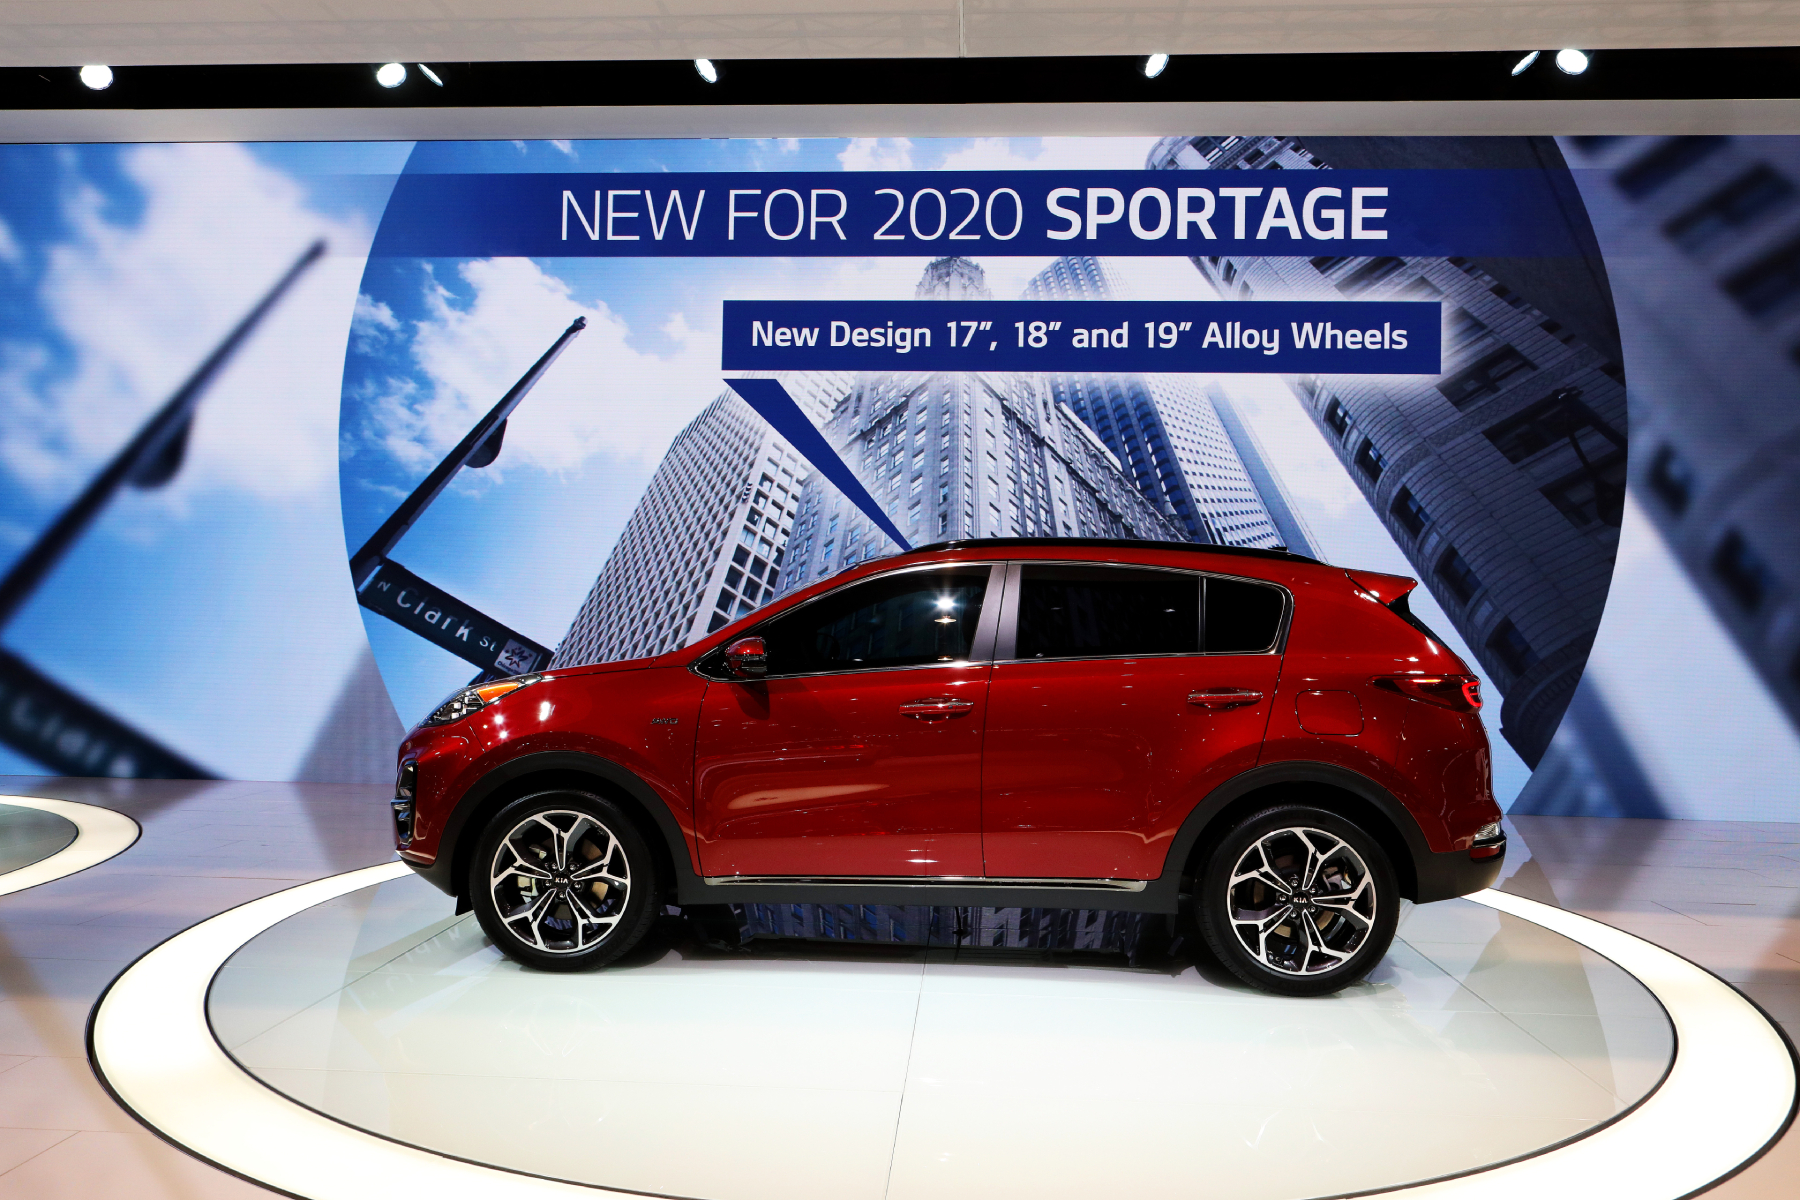 2020 Kia Sportage on display in a showroom